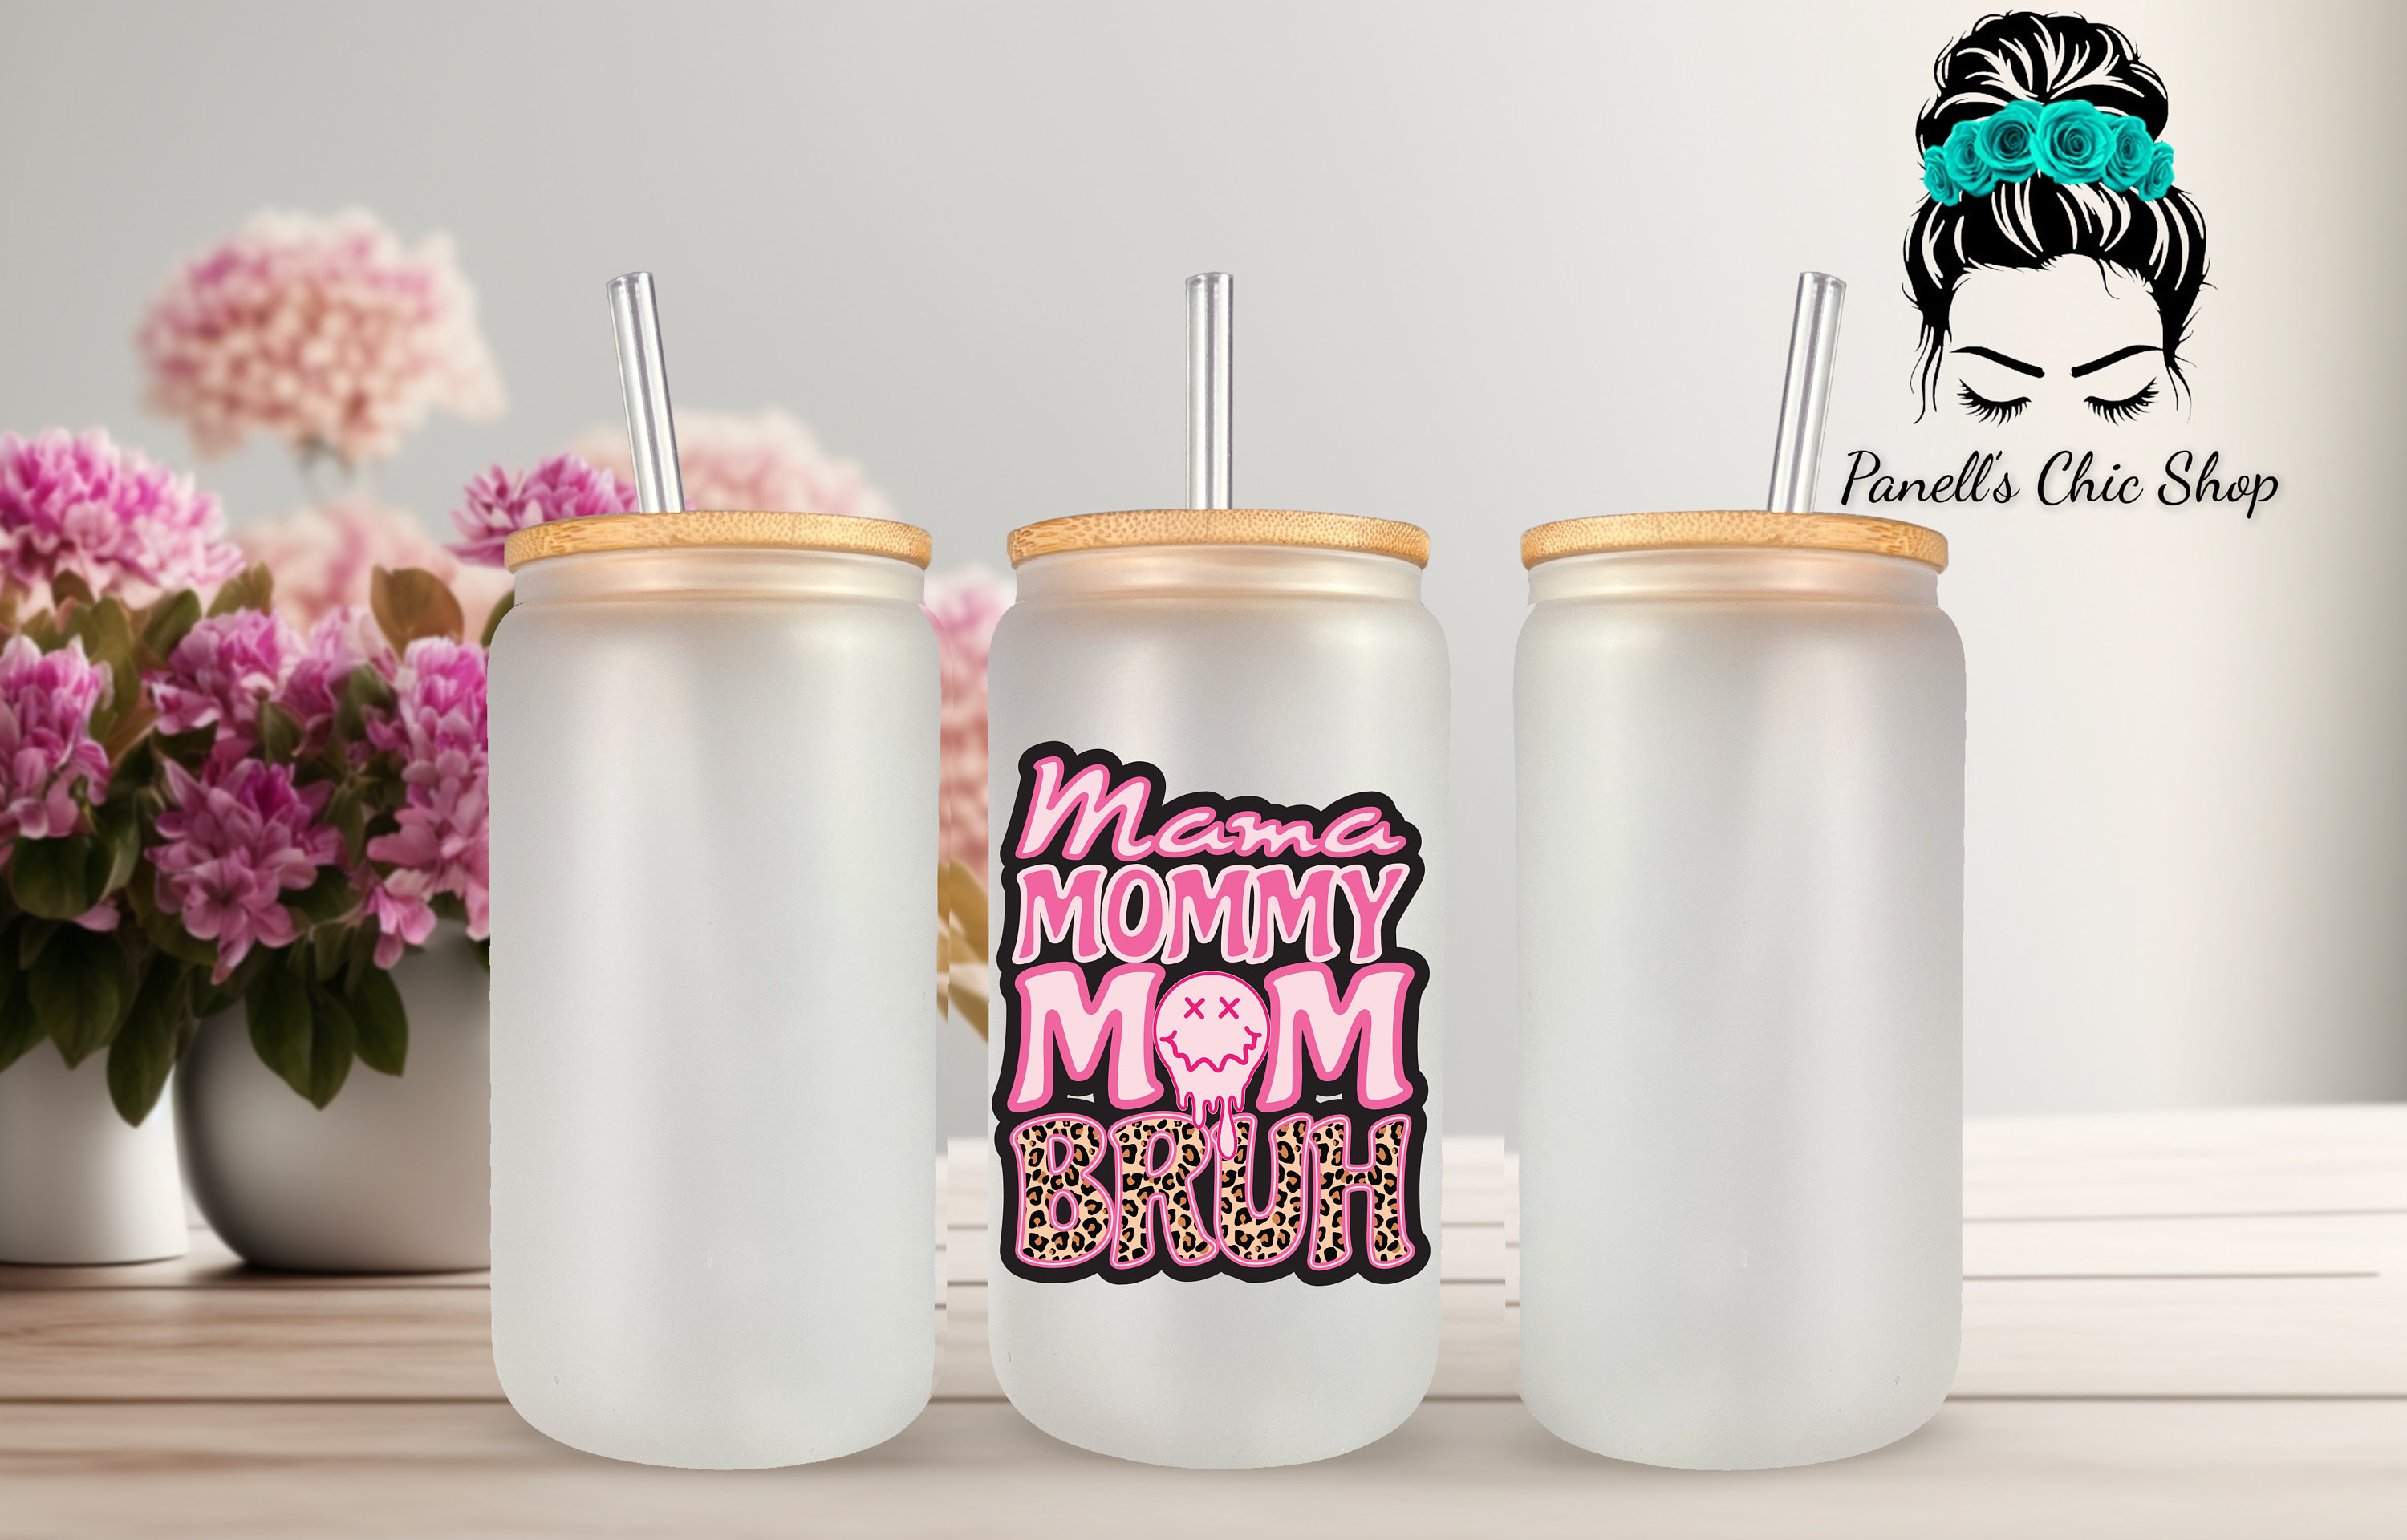 Regalo para Mama - Nutrition Facts Argentinian Mom Digital Art by